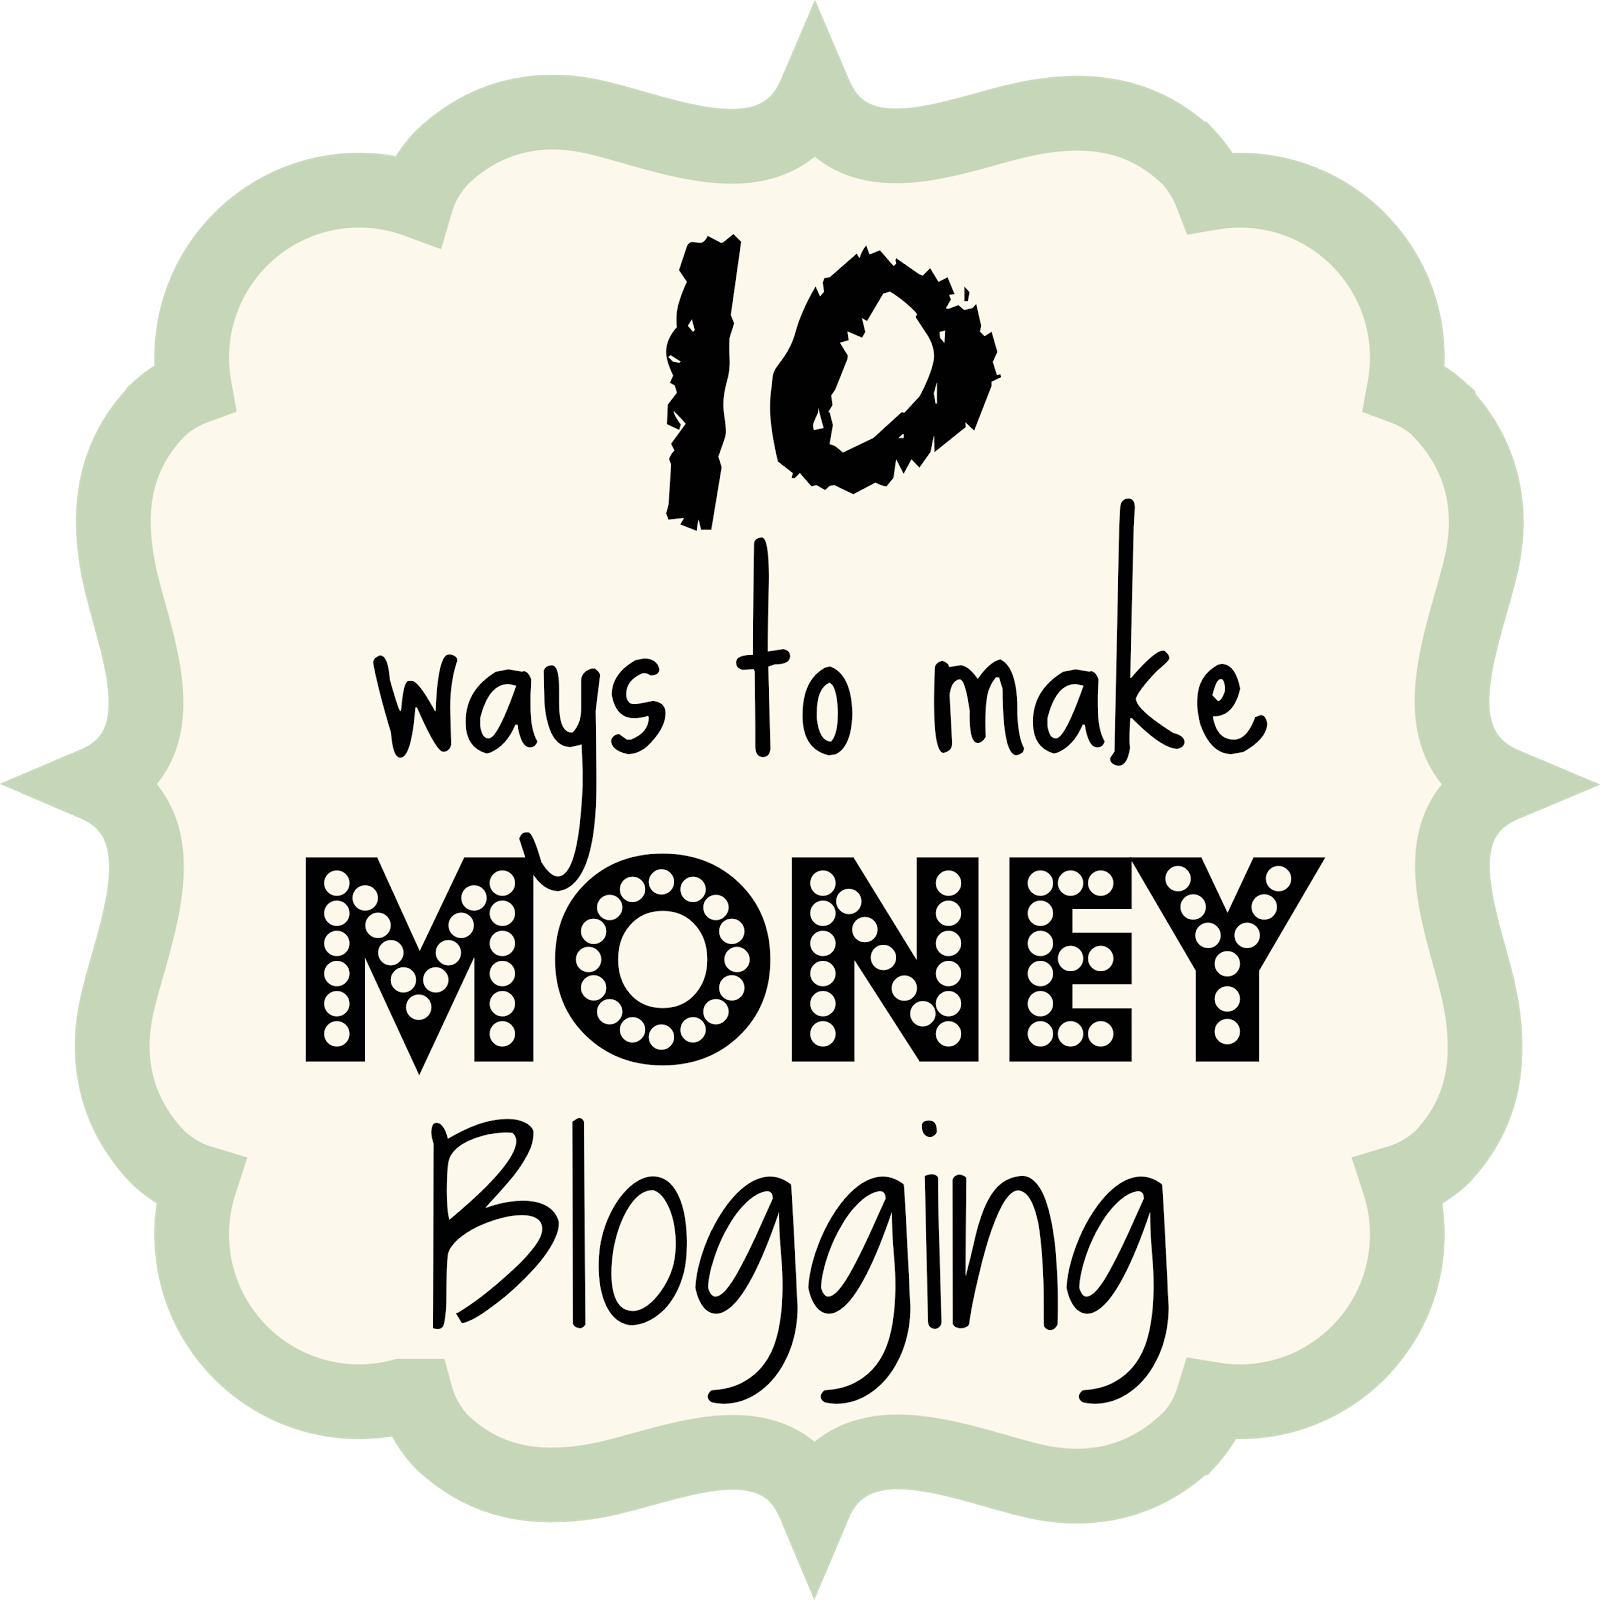 making money blogging australia